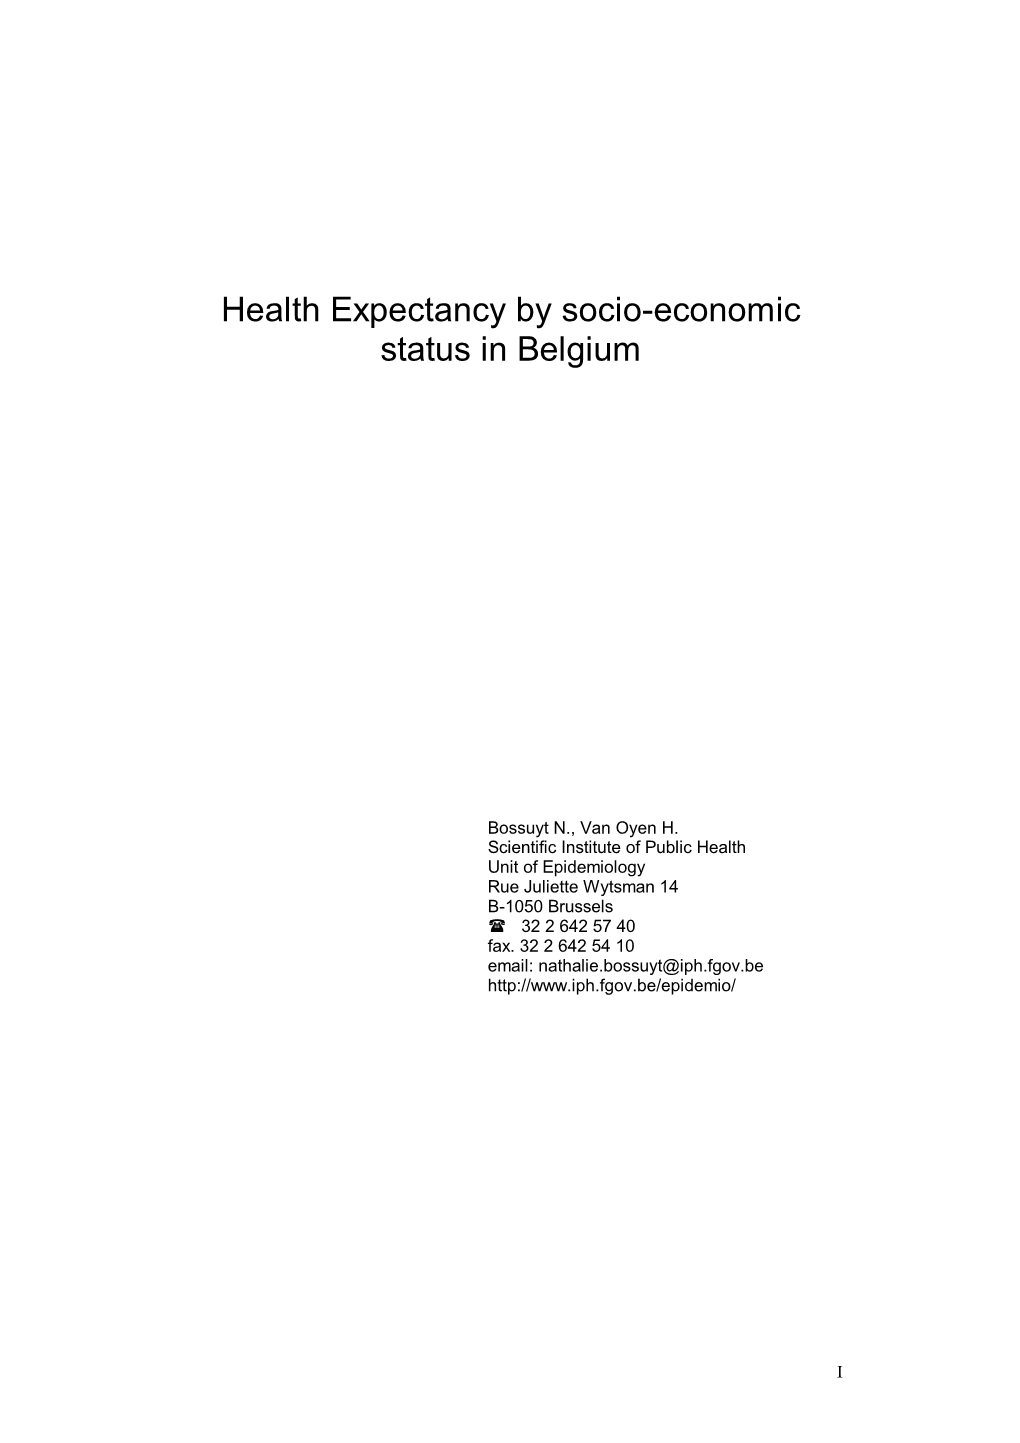 Health Expectancy by Socio-Economic Status in Belgium